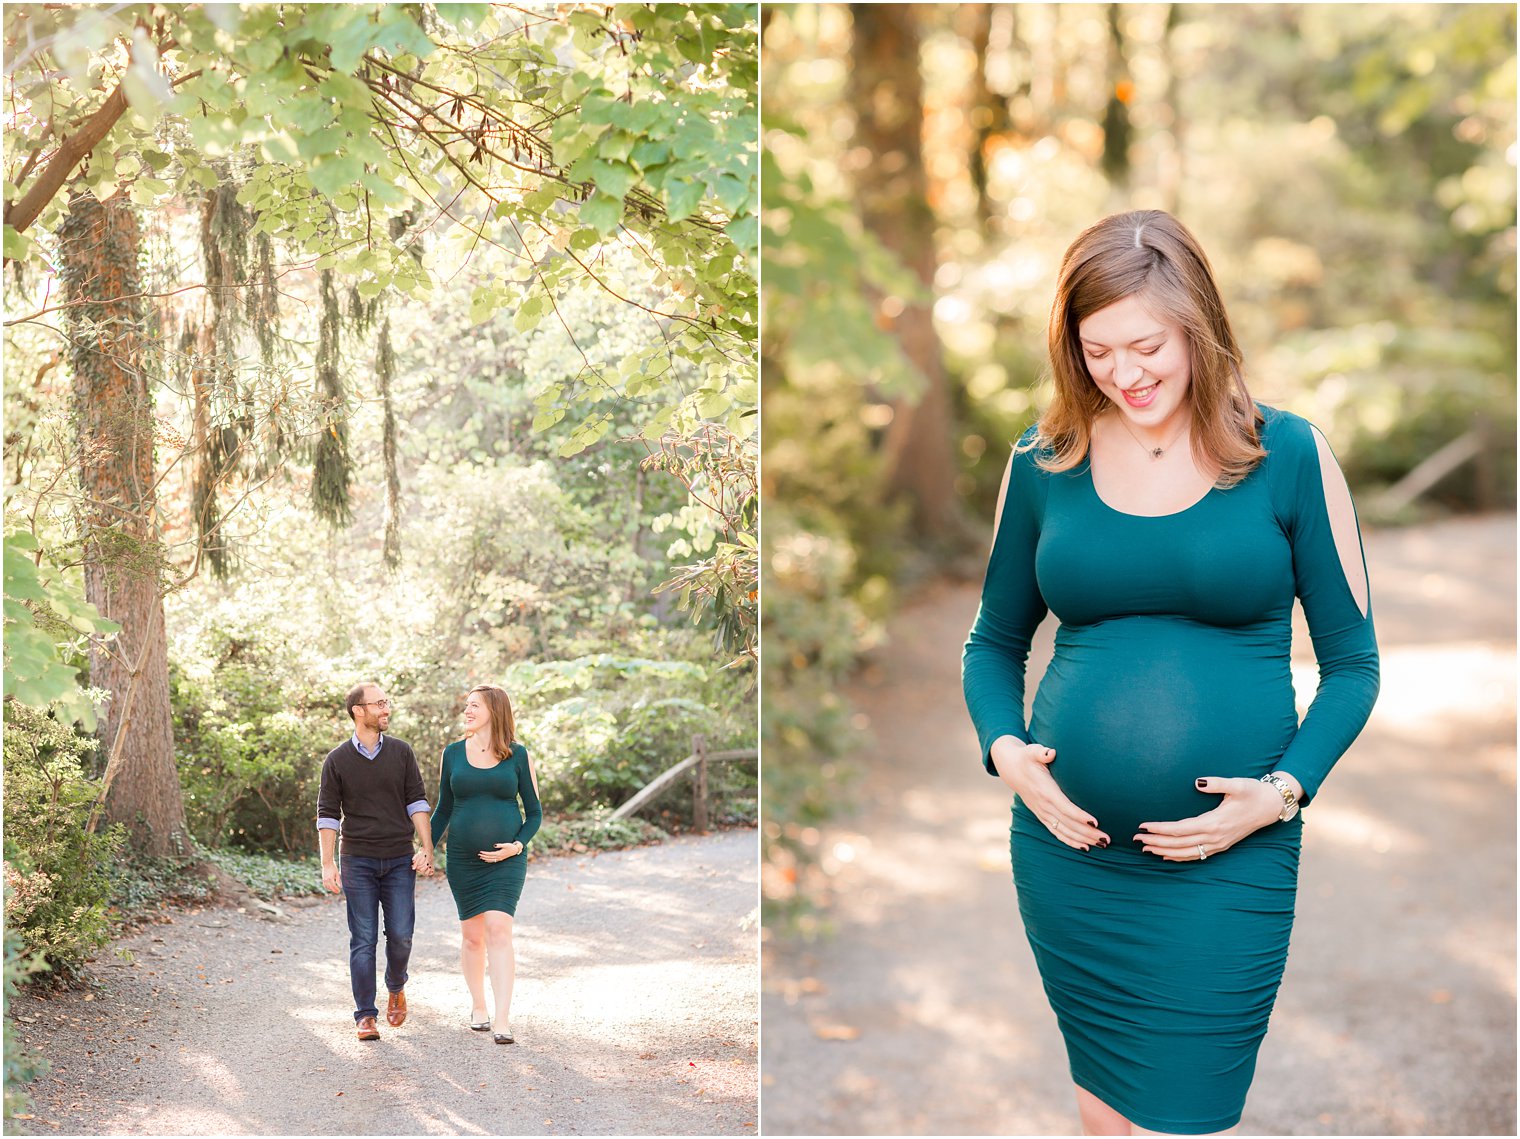 Pregnancy photo shoot at Sayen Gardens